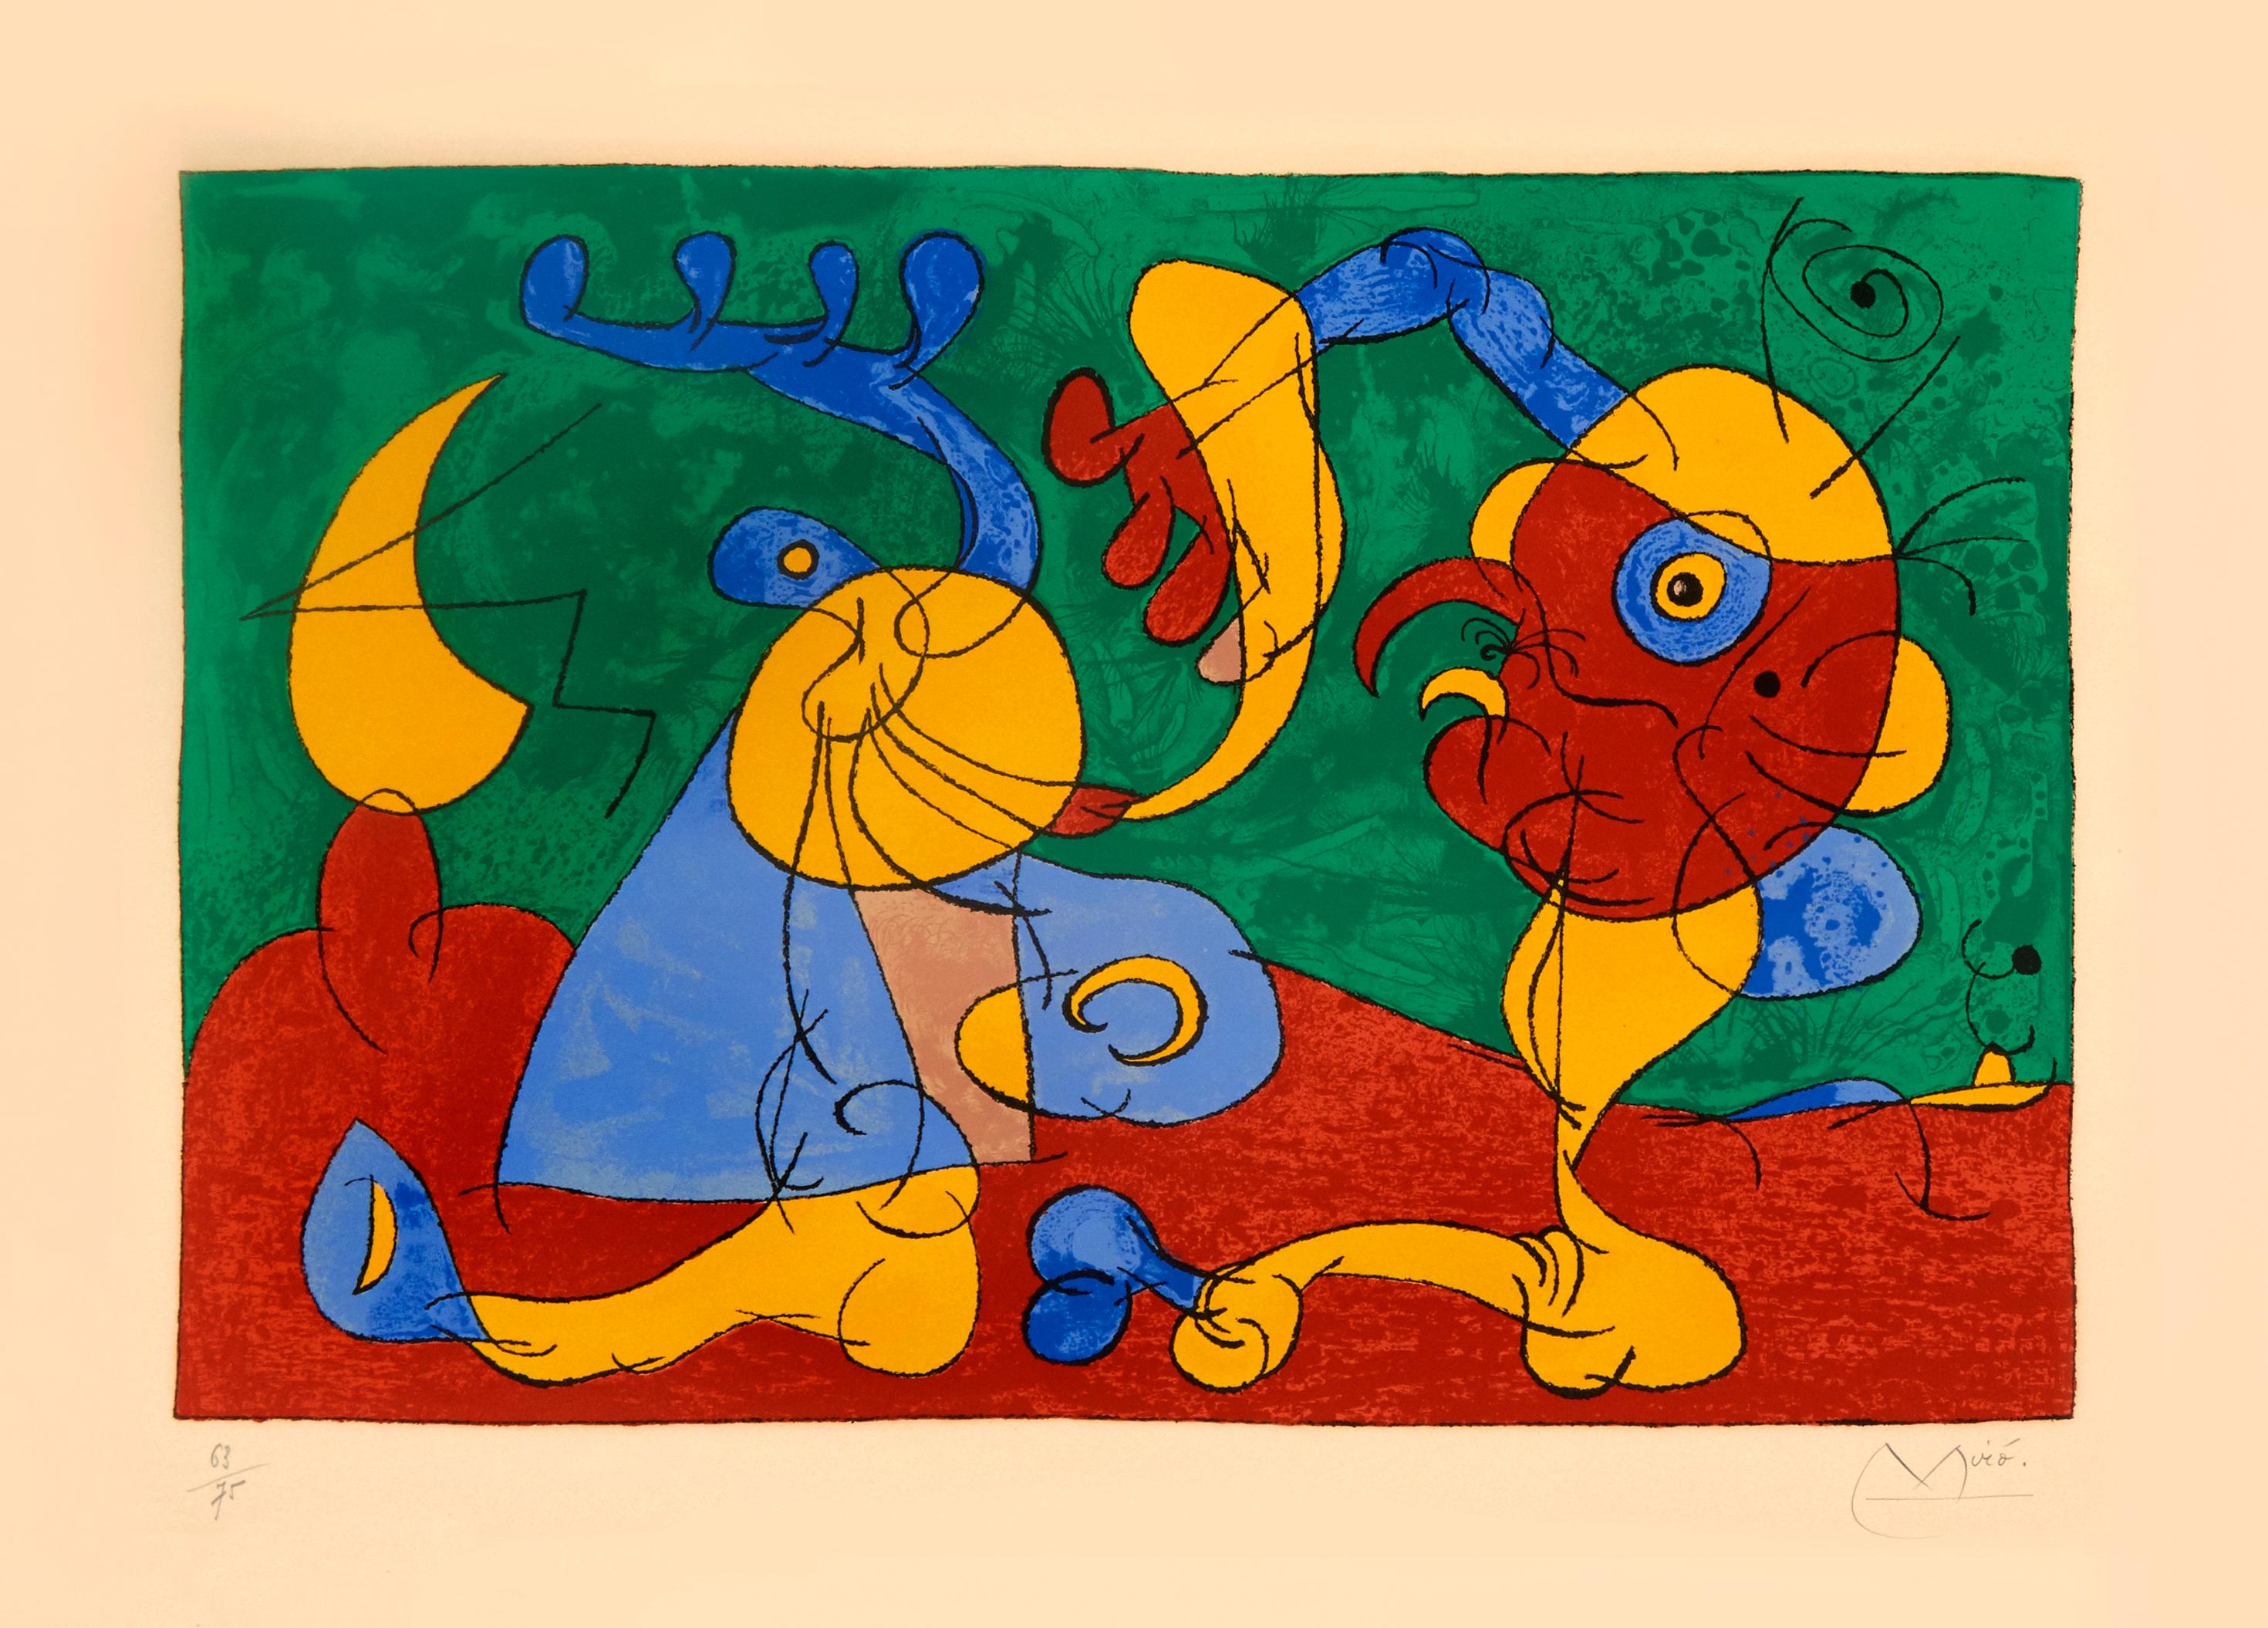 Joan Miró Abstract Print - PL.7 from "Ubu Roi" by Joan Miro